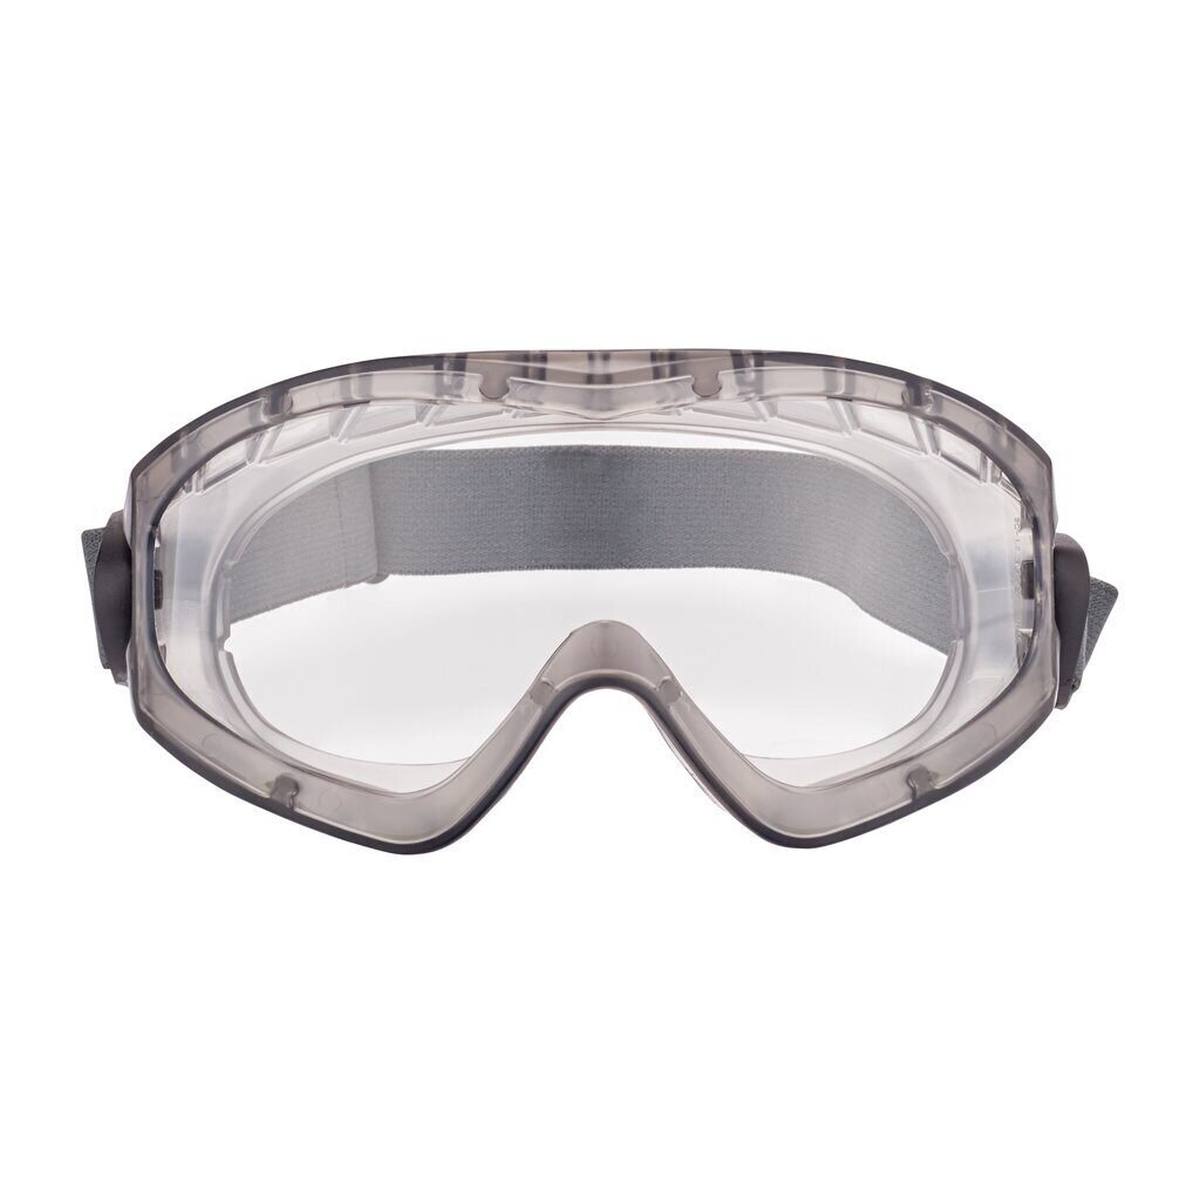 3M 2891S-SGAF Full-vision goggles, without ventilation slot (gas-tight), adjustable hinges, anti-fog coating